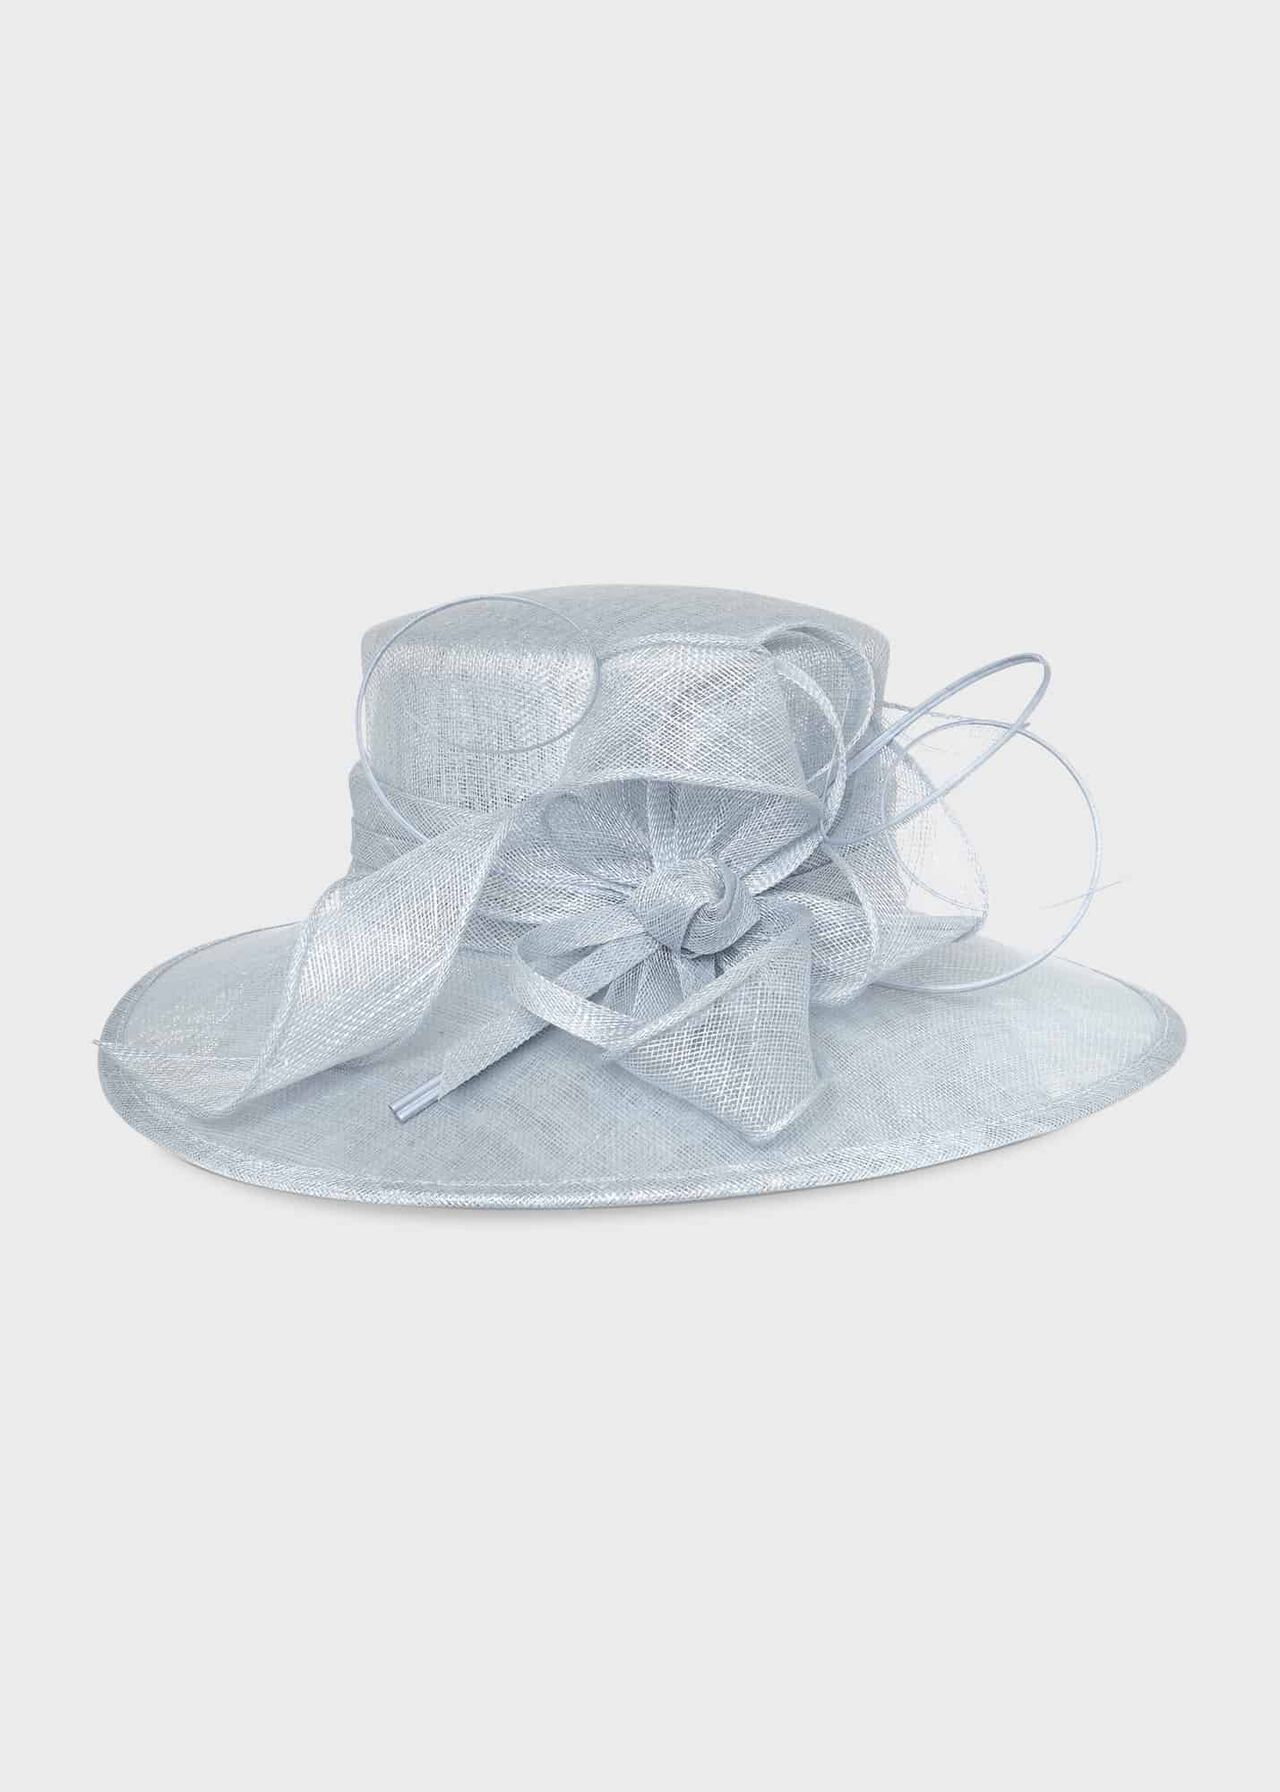 Chatham Hat, Ice Blue, hi-res